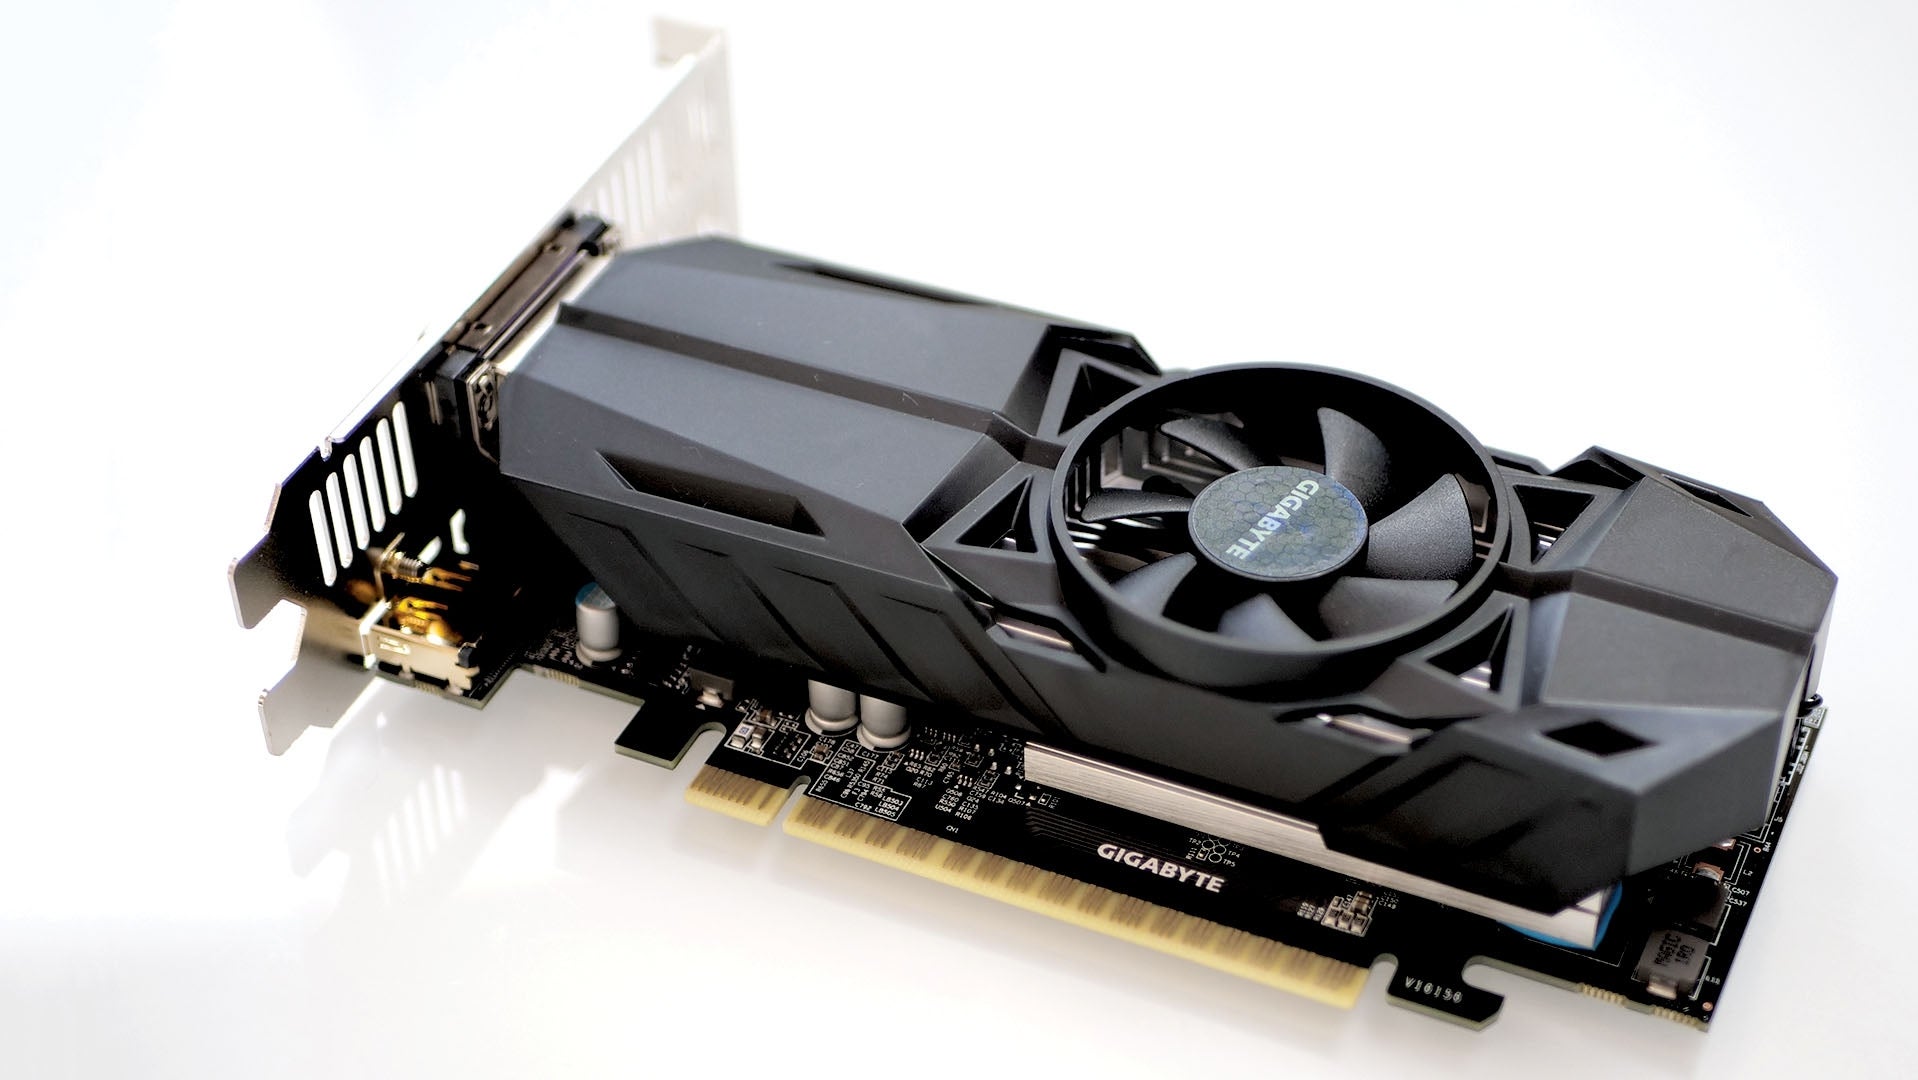 Nvidia GeForce GTX 1050 3GB benchmarks: a better budget GPU